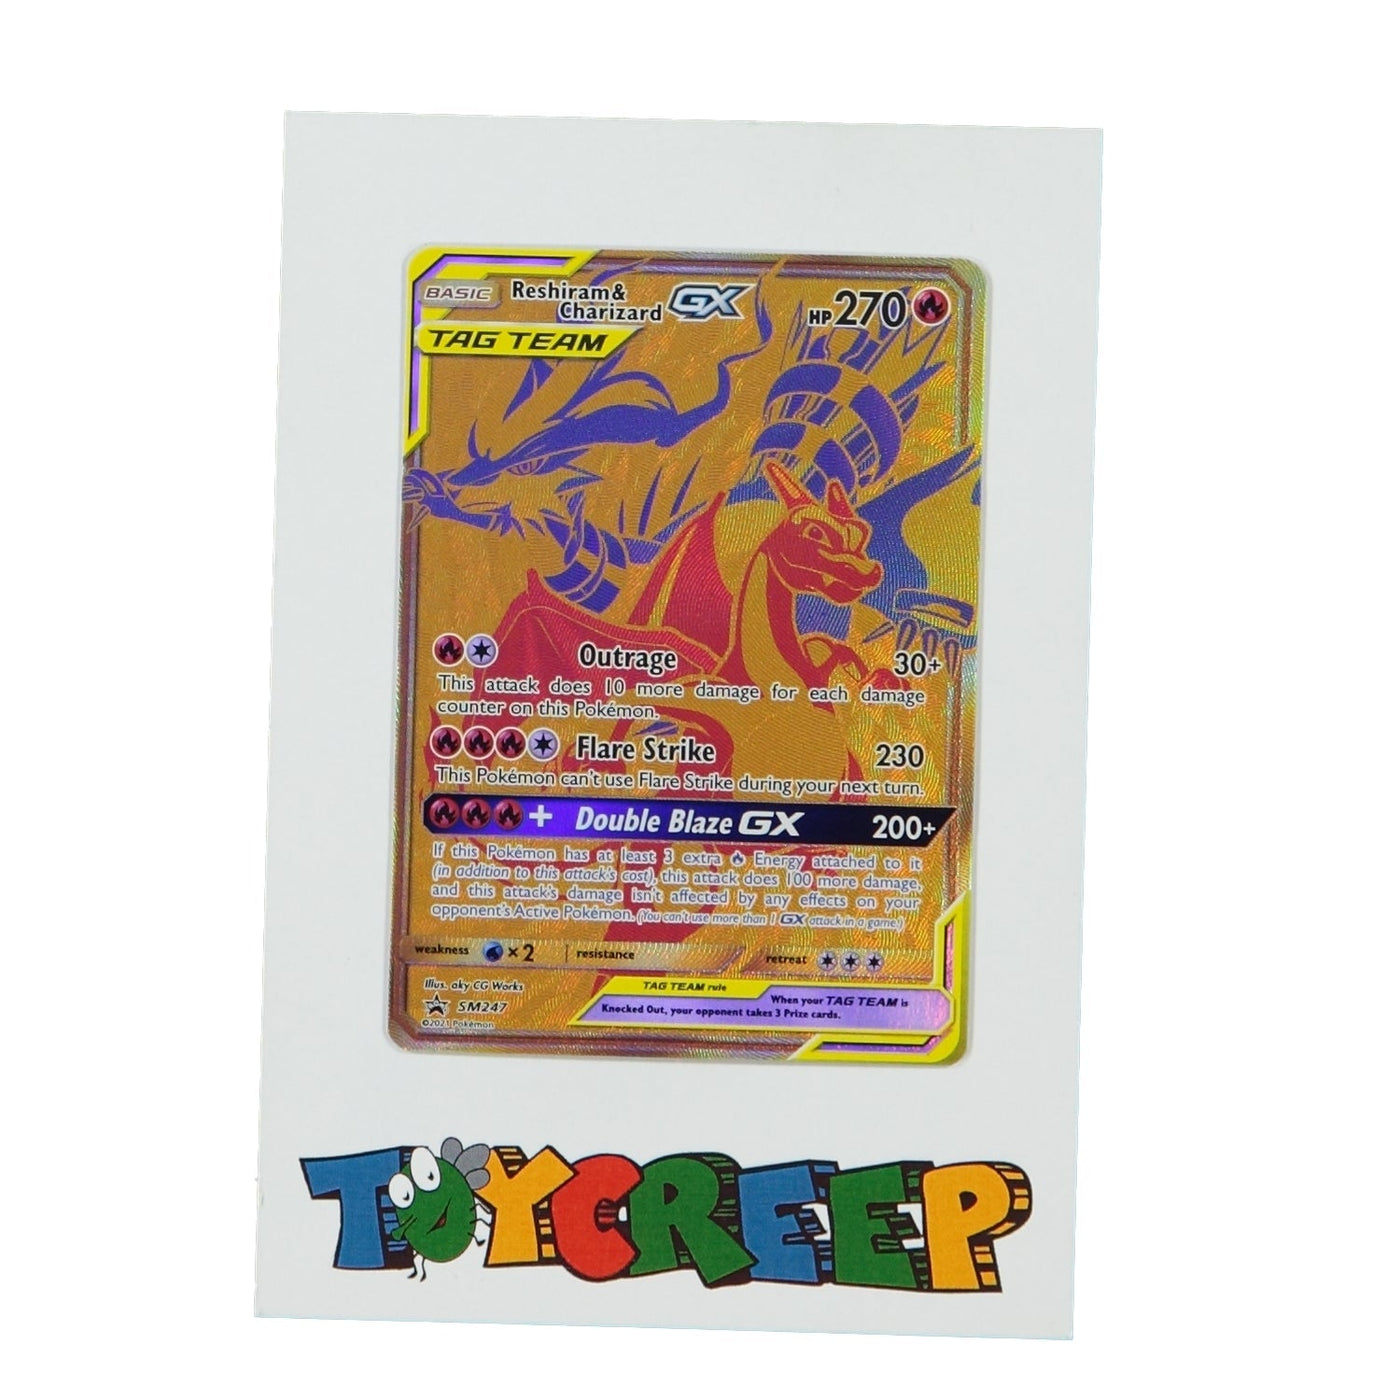 Pokemon TCG SM247 Reshiram & Charizard Black Star Promo Card - stylecreep.com